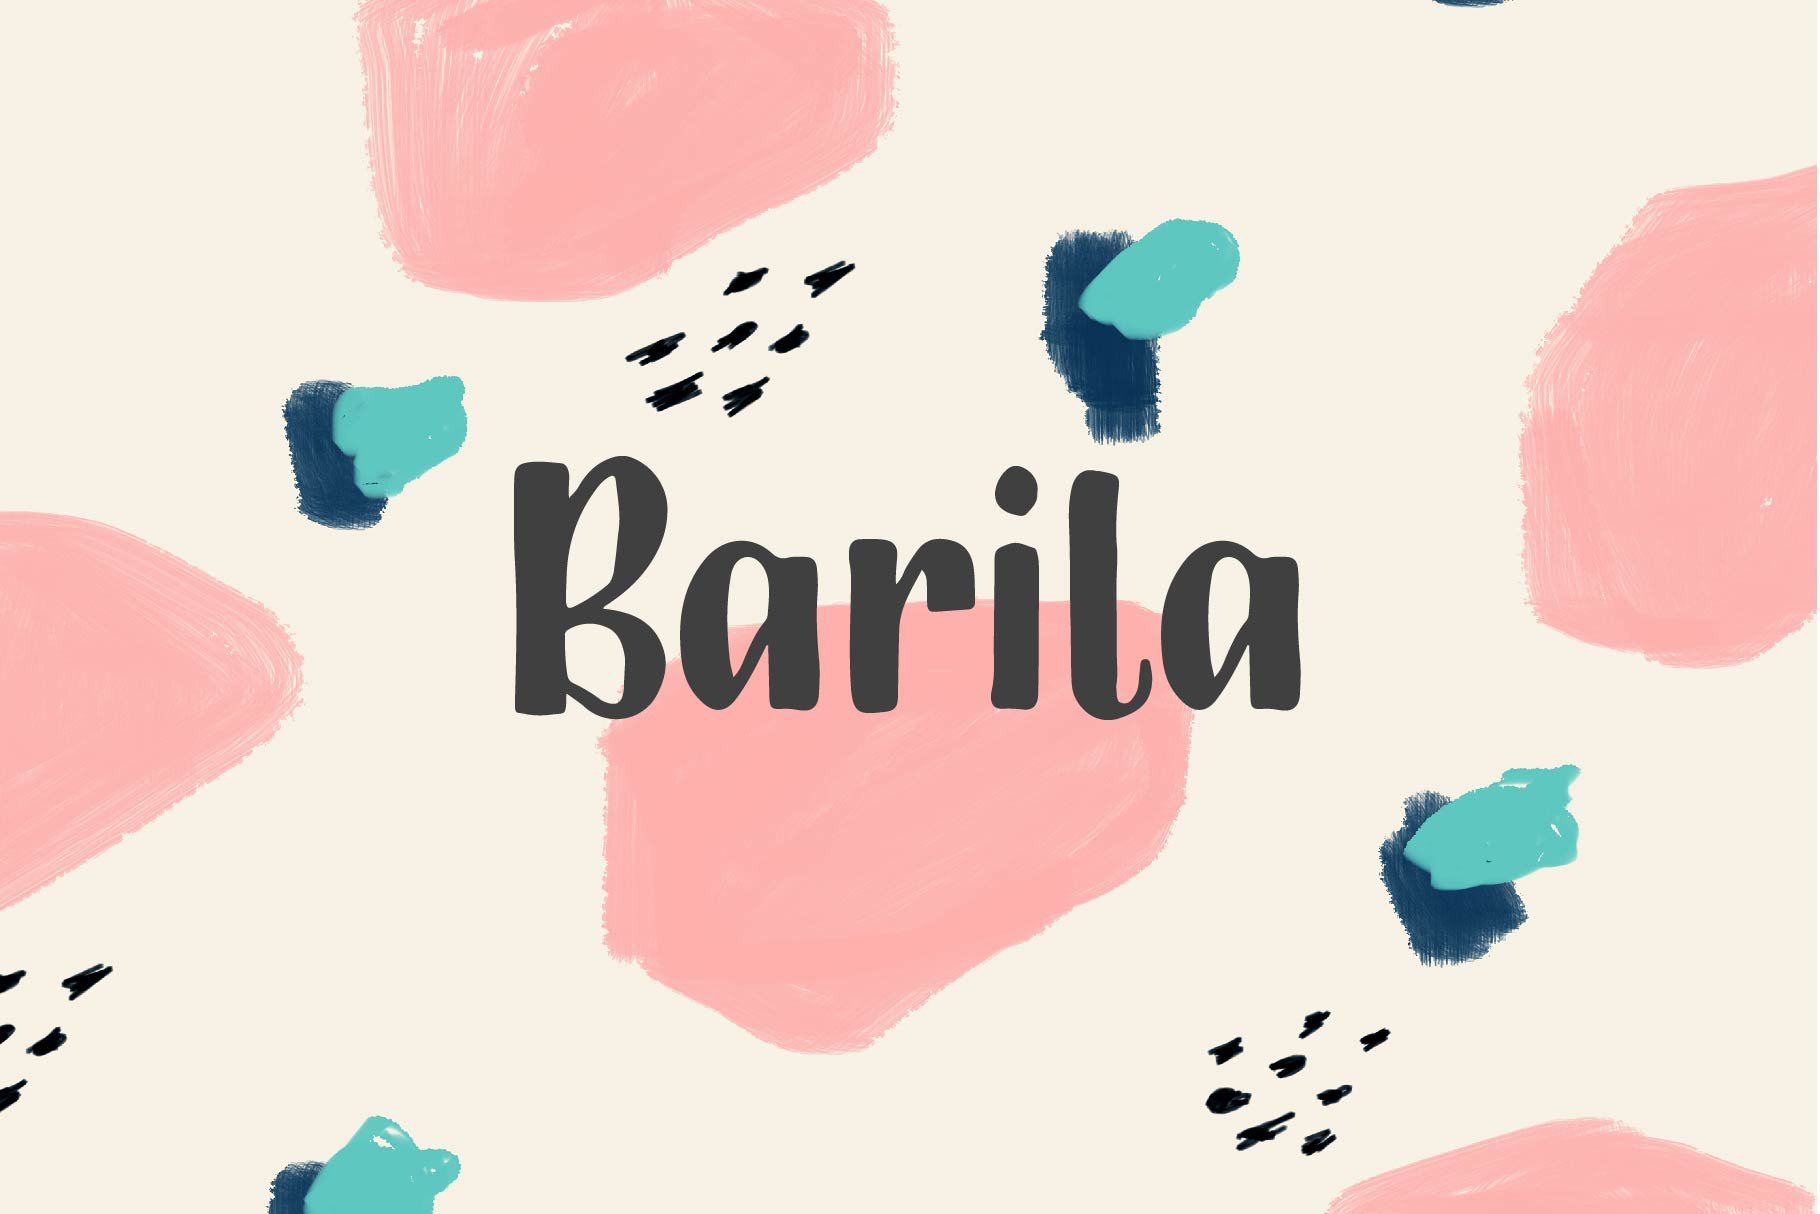 Barila Multilingual Font cover image.